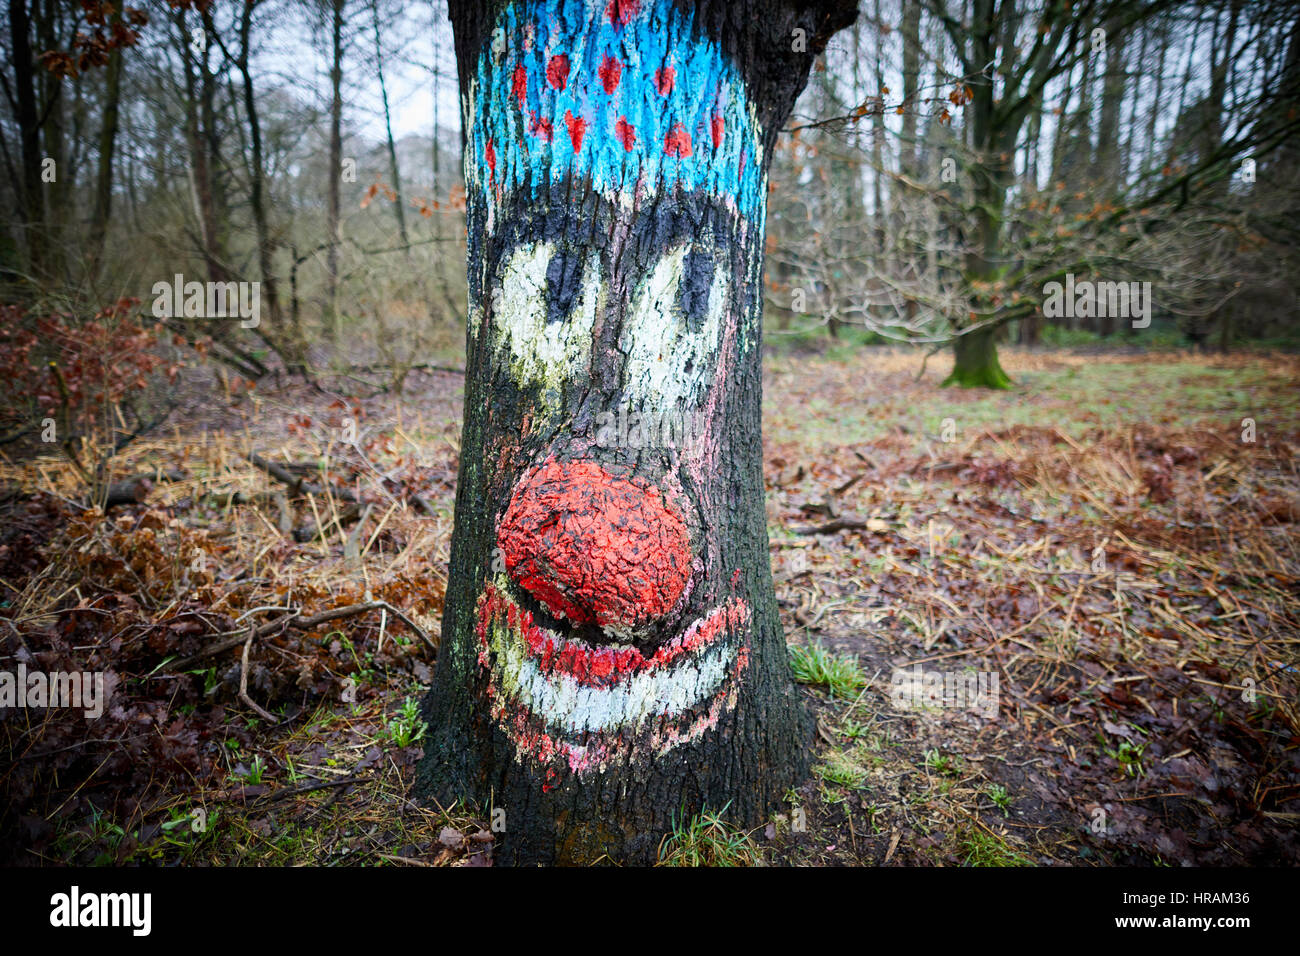 Pintados a mano de obra cara estilo payaso feliz agrandar árbol con su propio Facebook seguidores Alsager Cheshire East cerca de Stoke-on-Trent Foto de stock